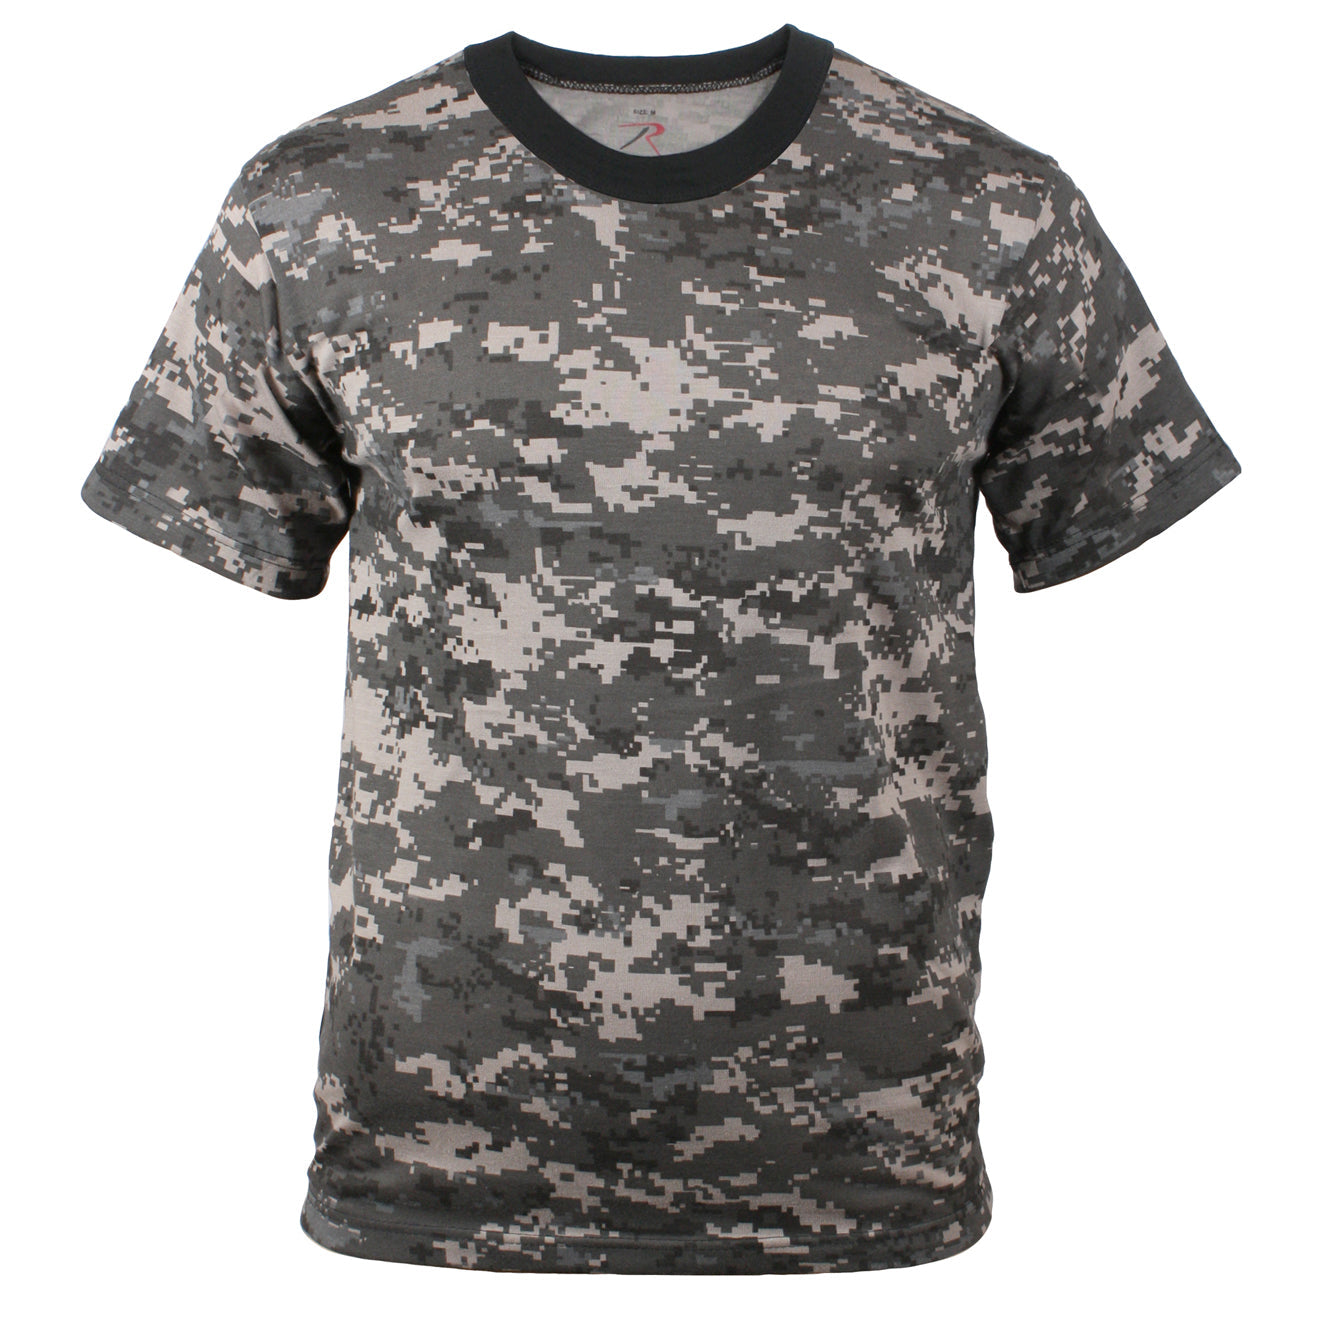 Rothco Camouflage T-Shirt Subdued Urban Digital Camo (5960)